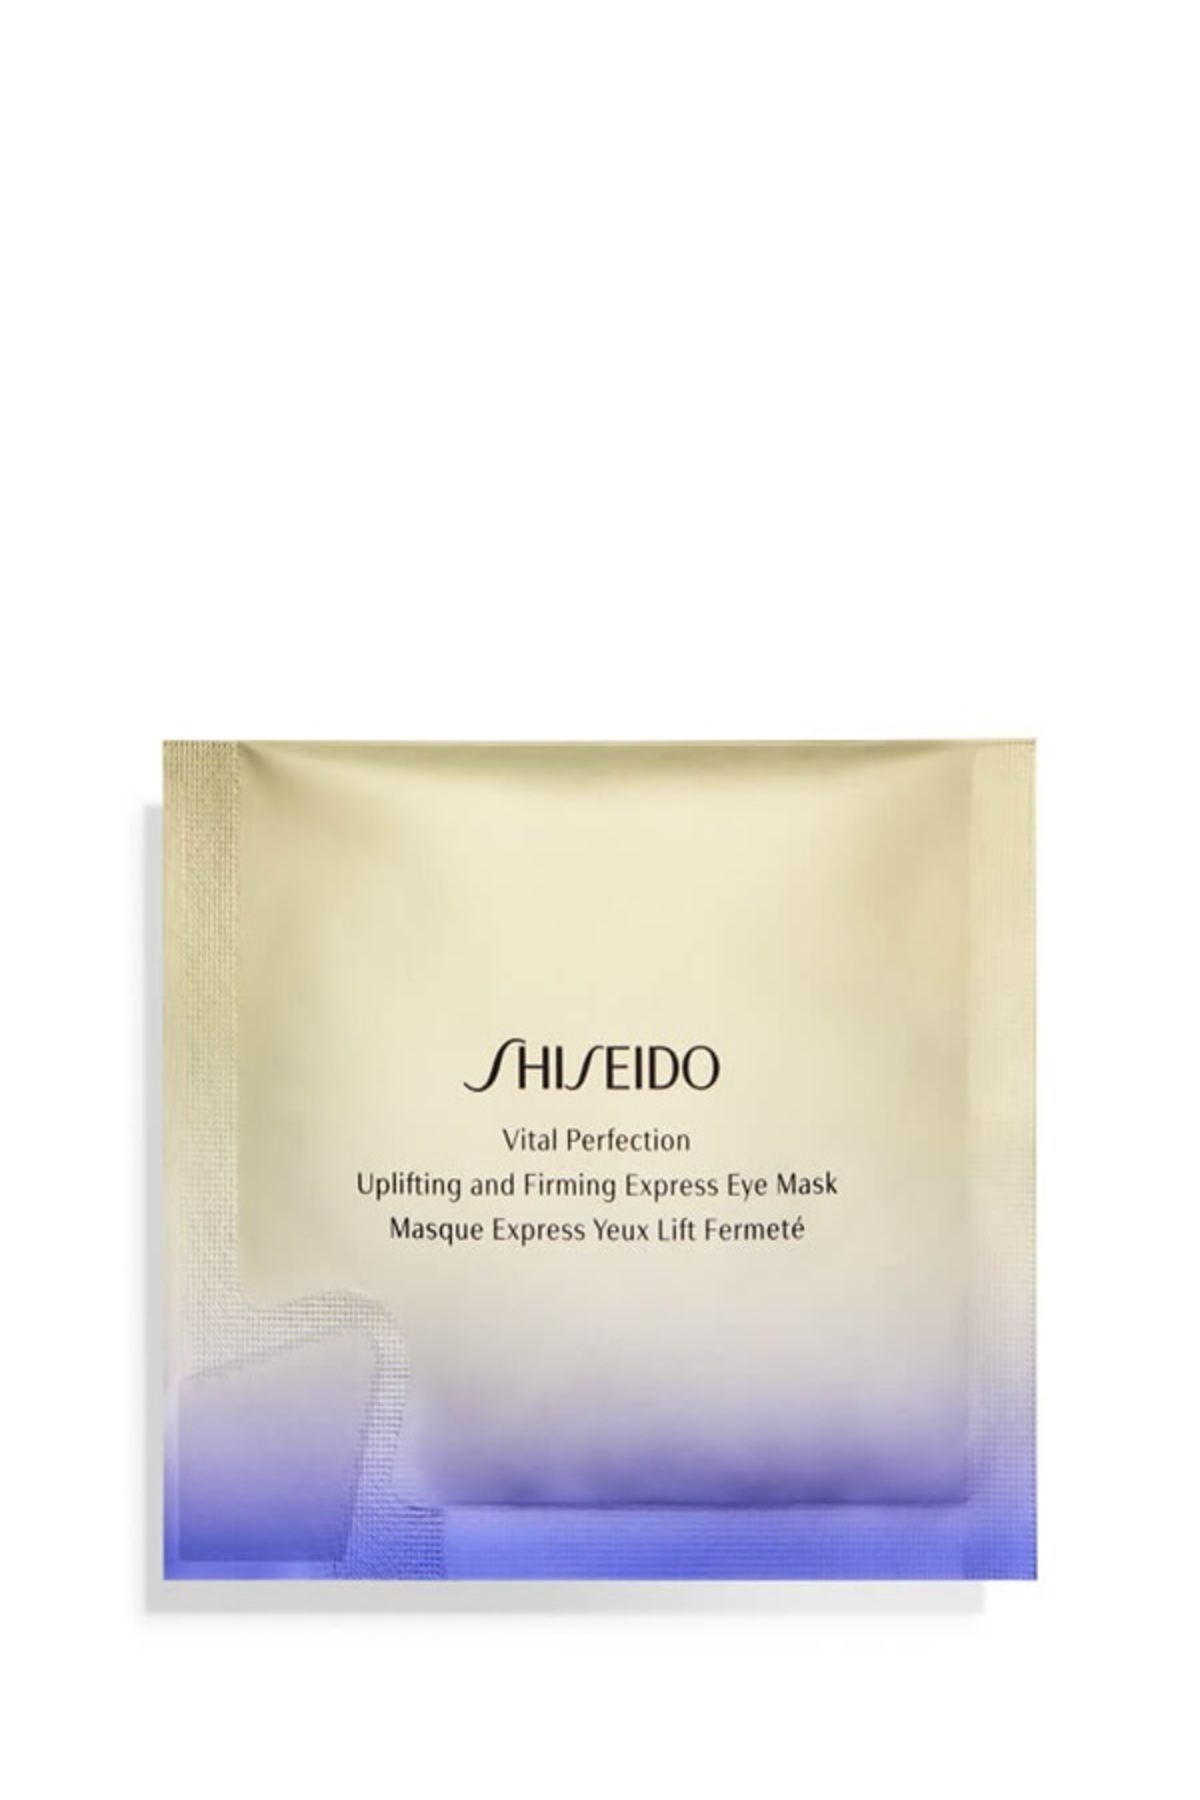 Shiseido ماسک چشم ضدپیری و فرم‌دهی ویتامین A و رتینول با نام تجاری و برند شیسیدو